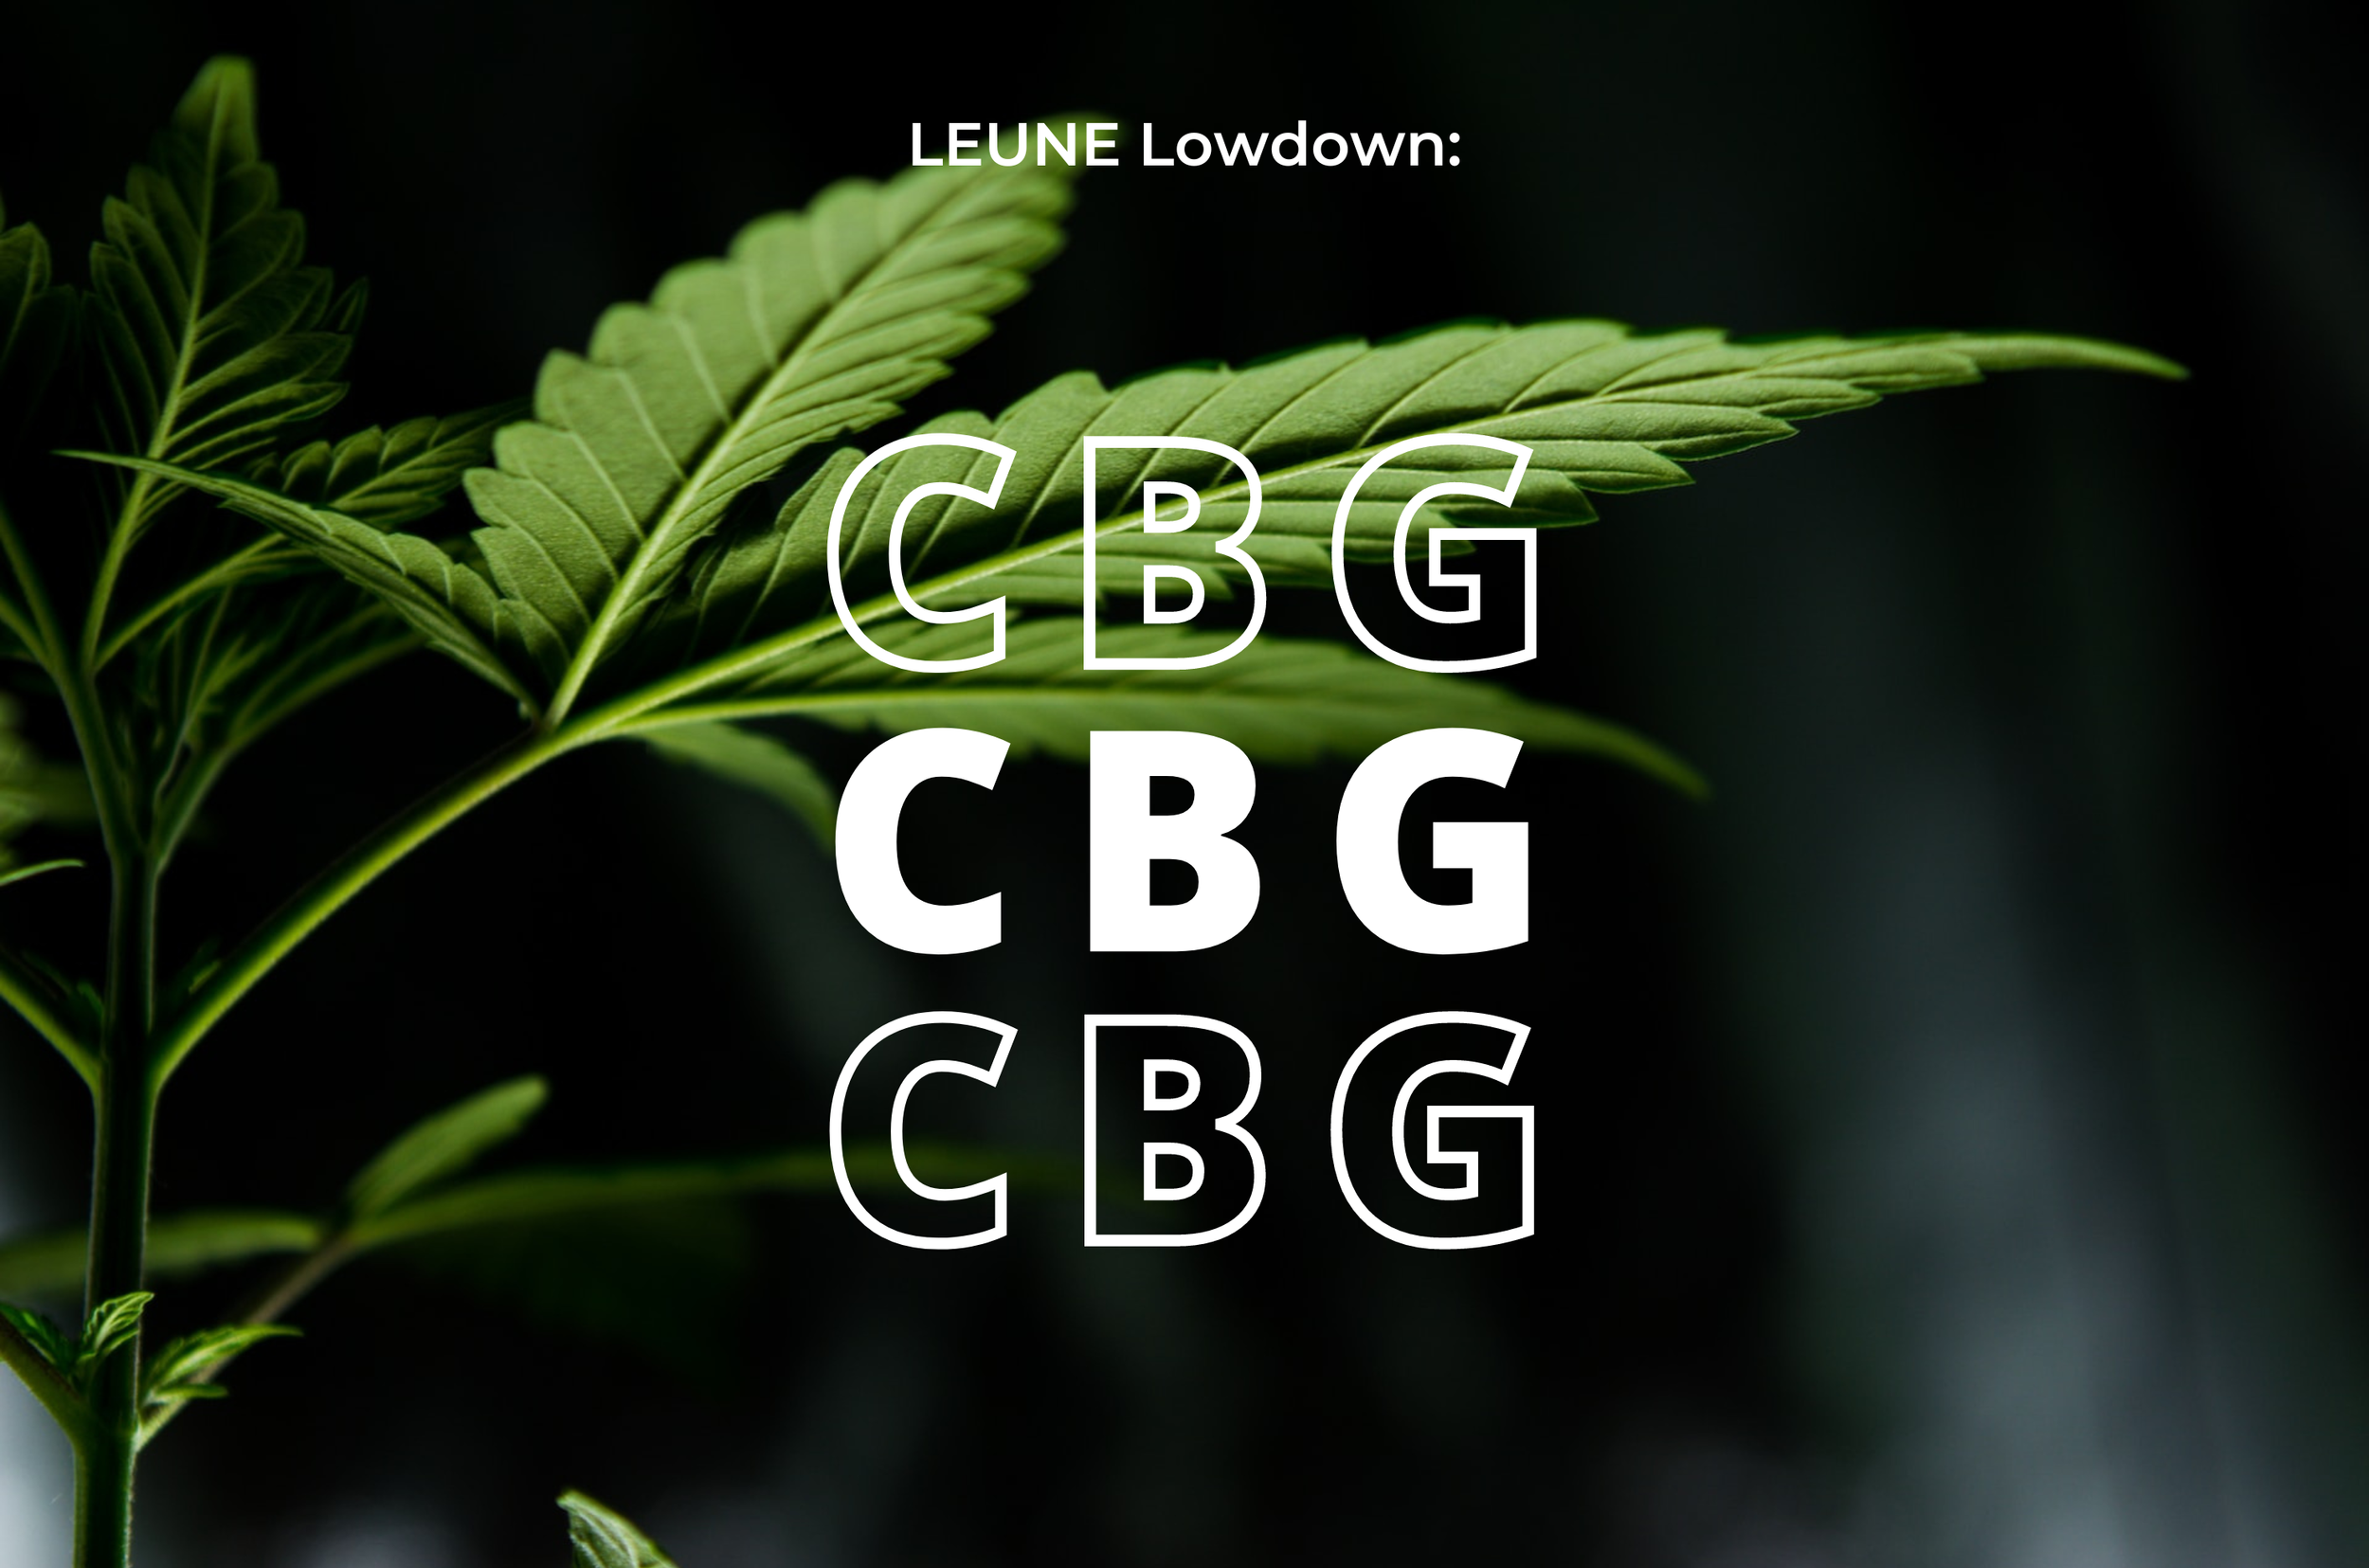 The LEUNE Lowdown: CBG | LEUNE